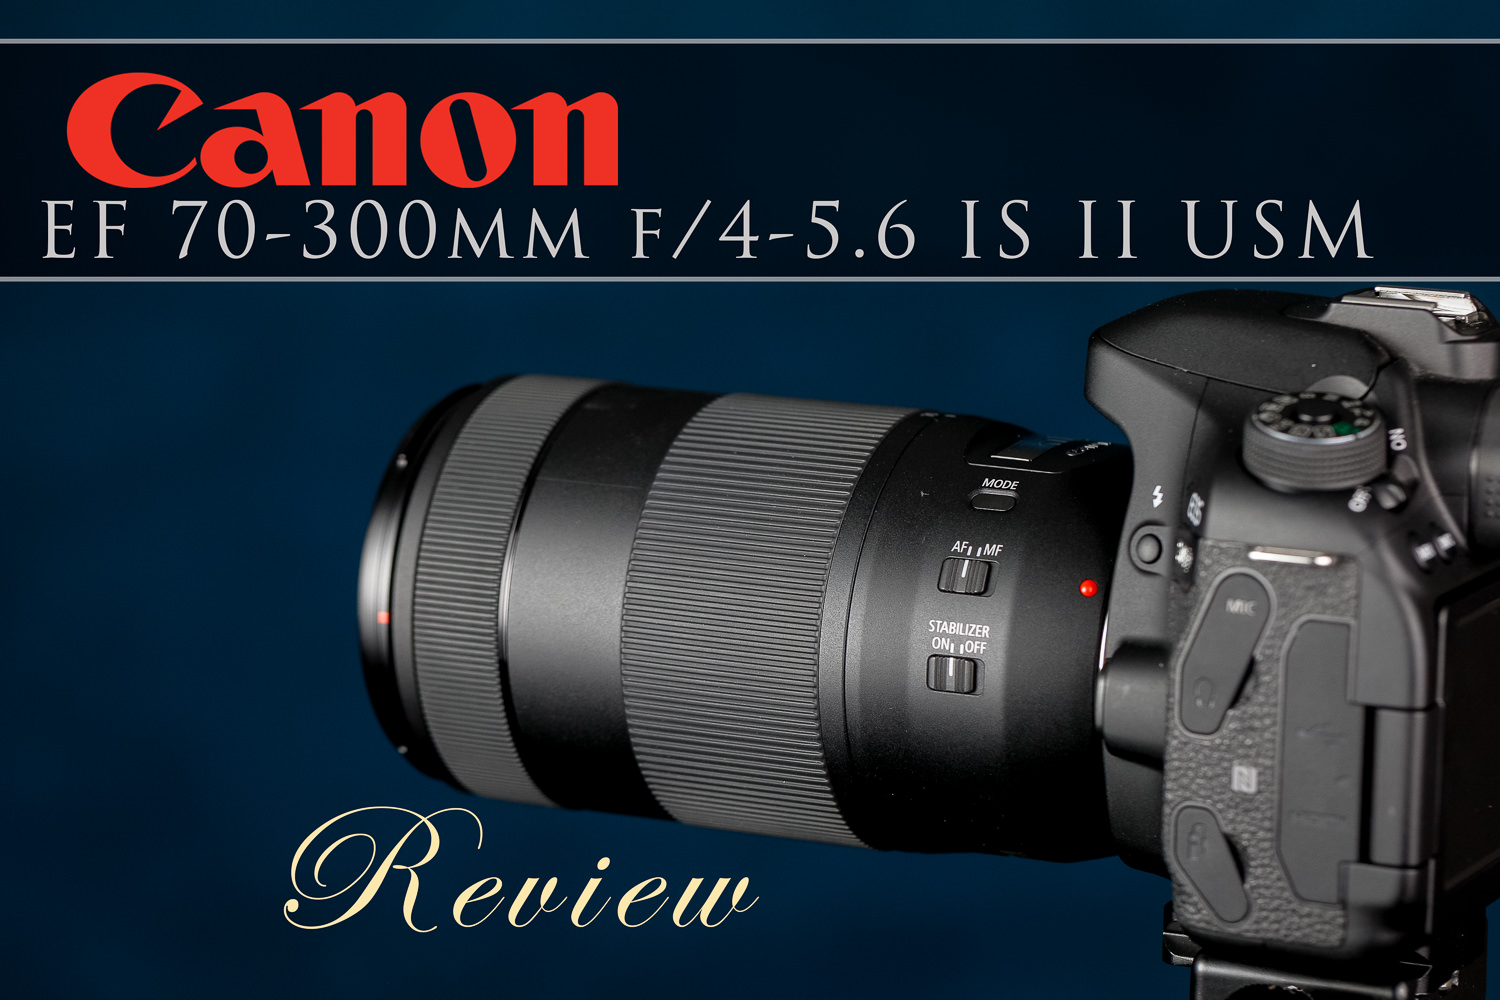 Canon EF 70-300mm f/4-5.6 IS II USM Review - DustinAbbott.net